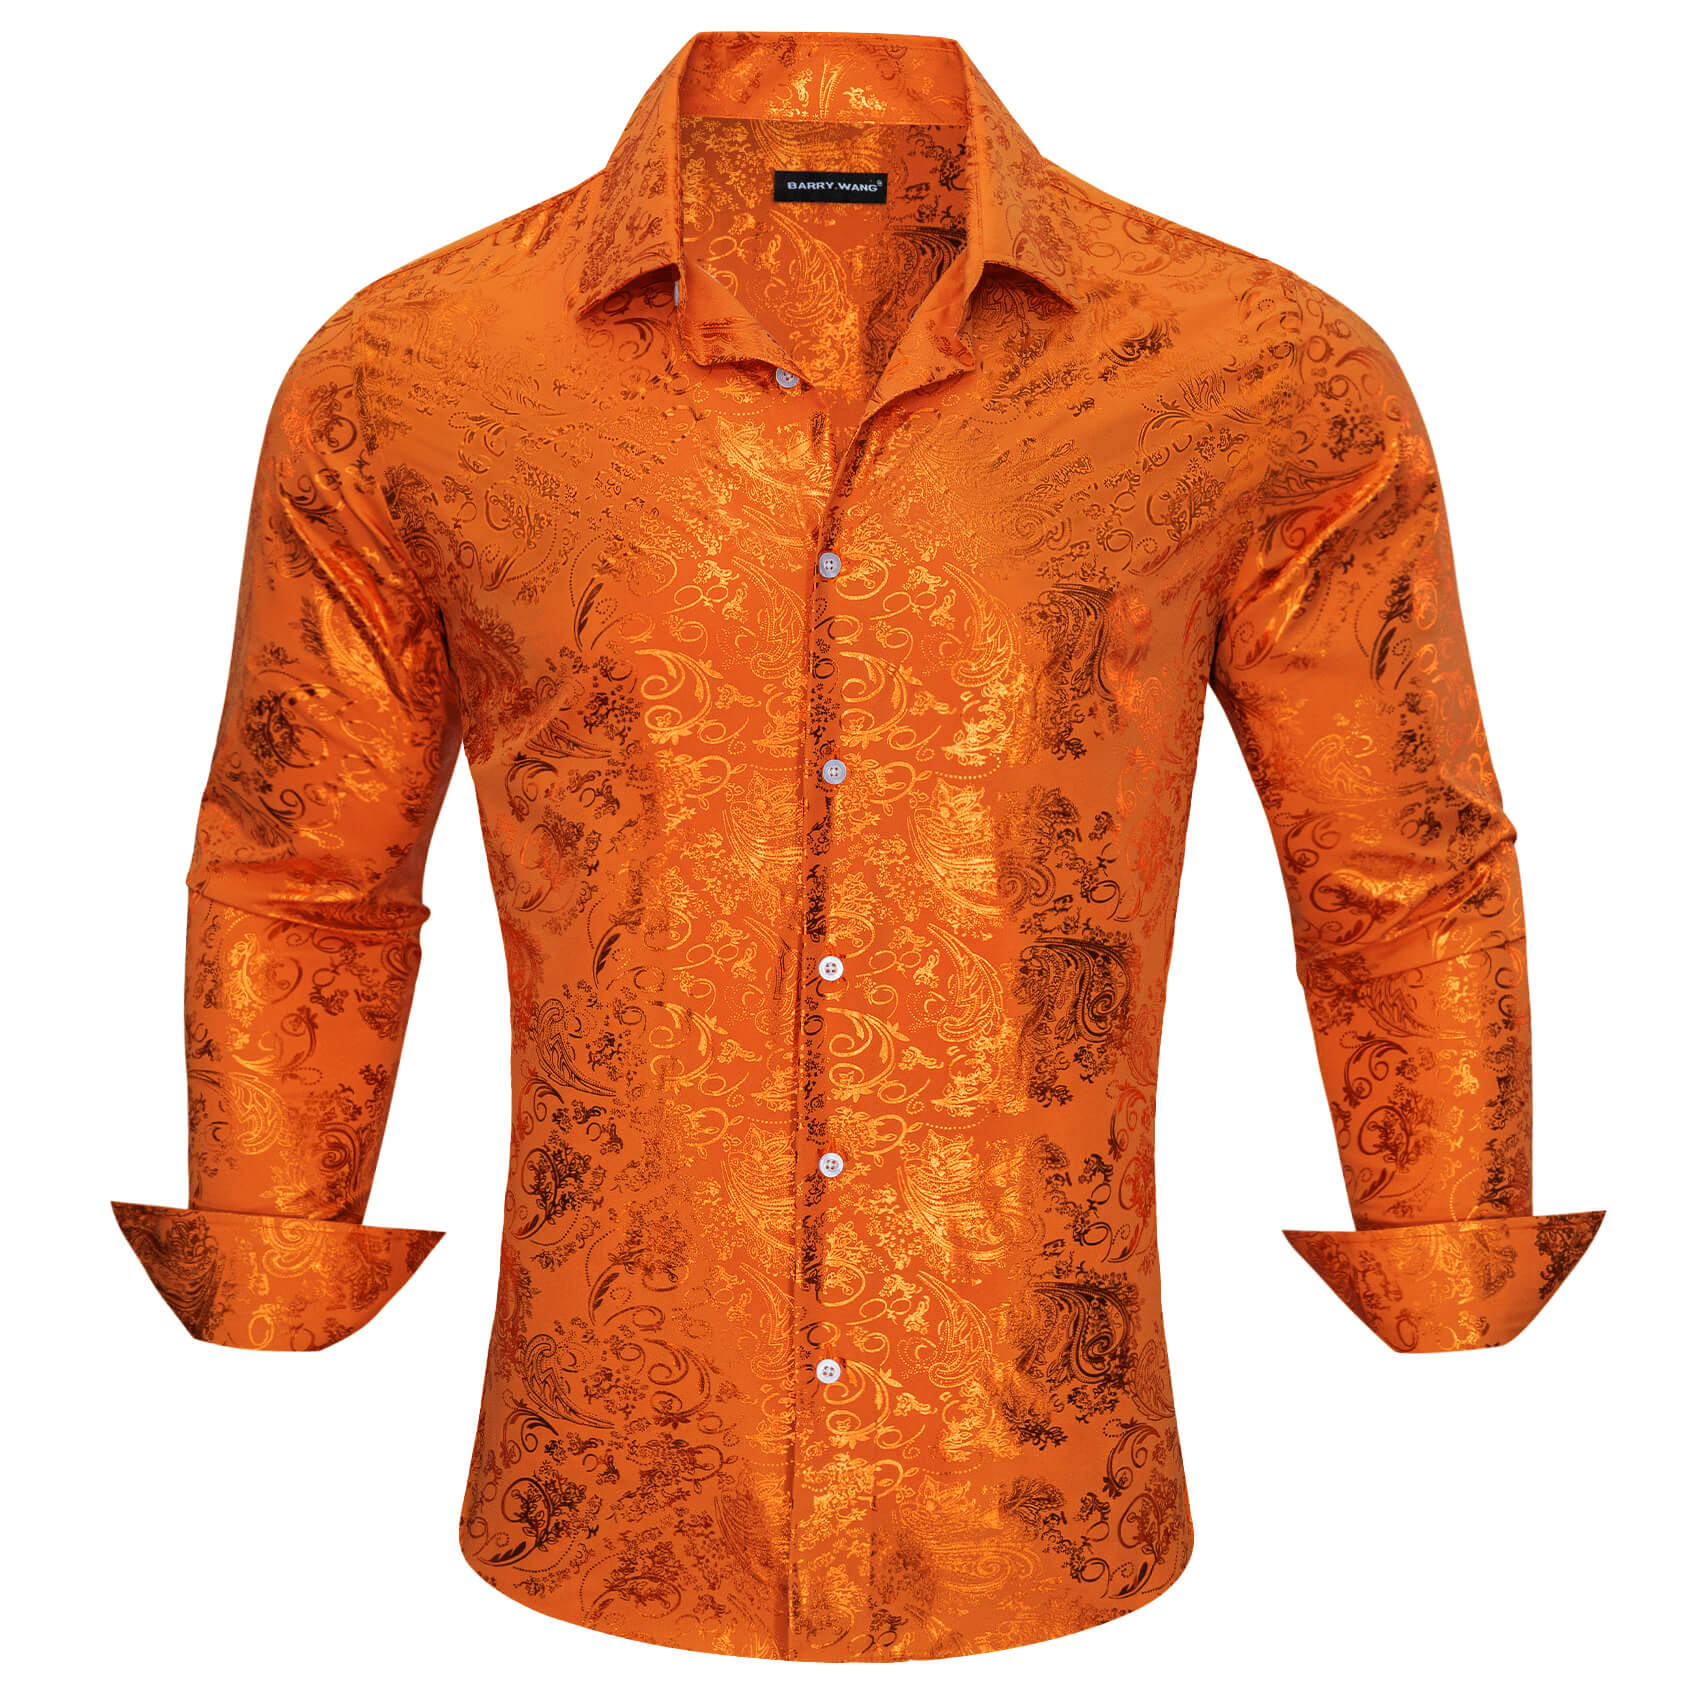  Floral Fire Orange Men's Silk Shirt